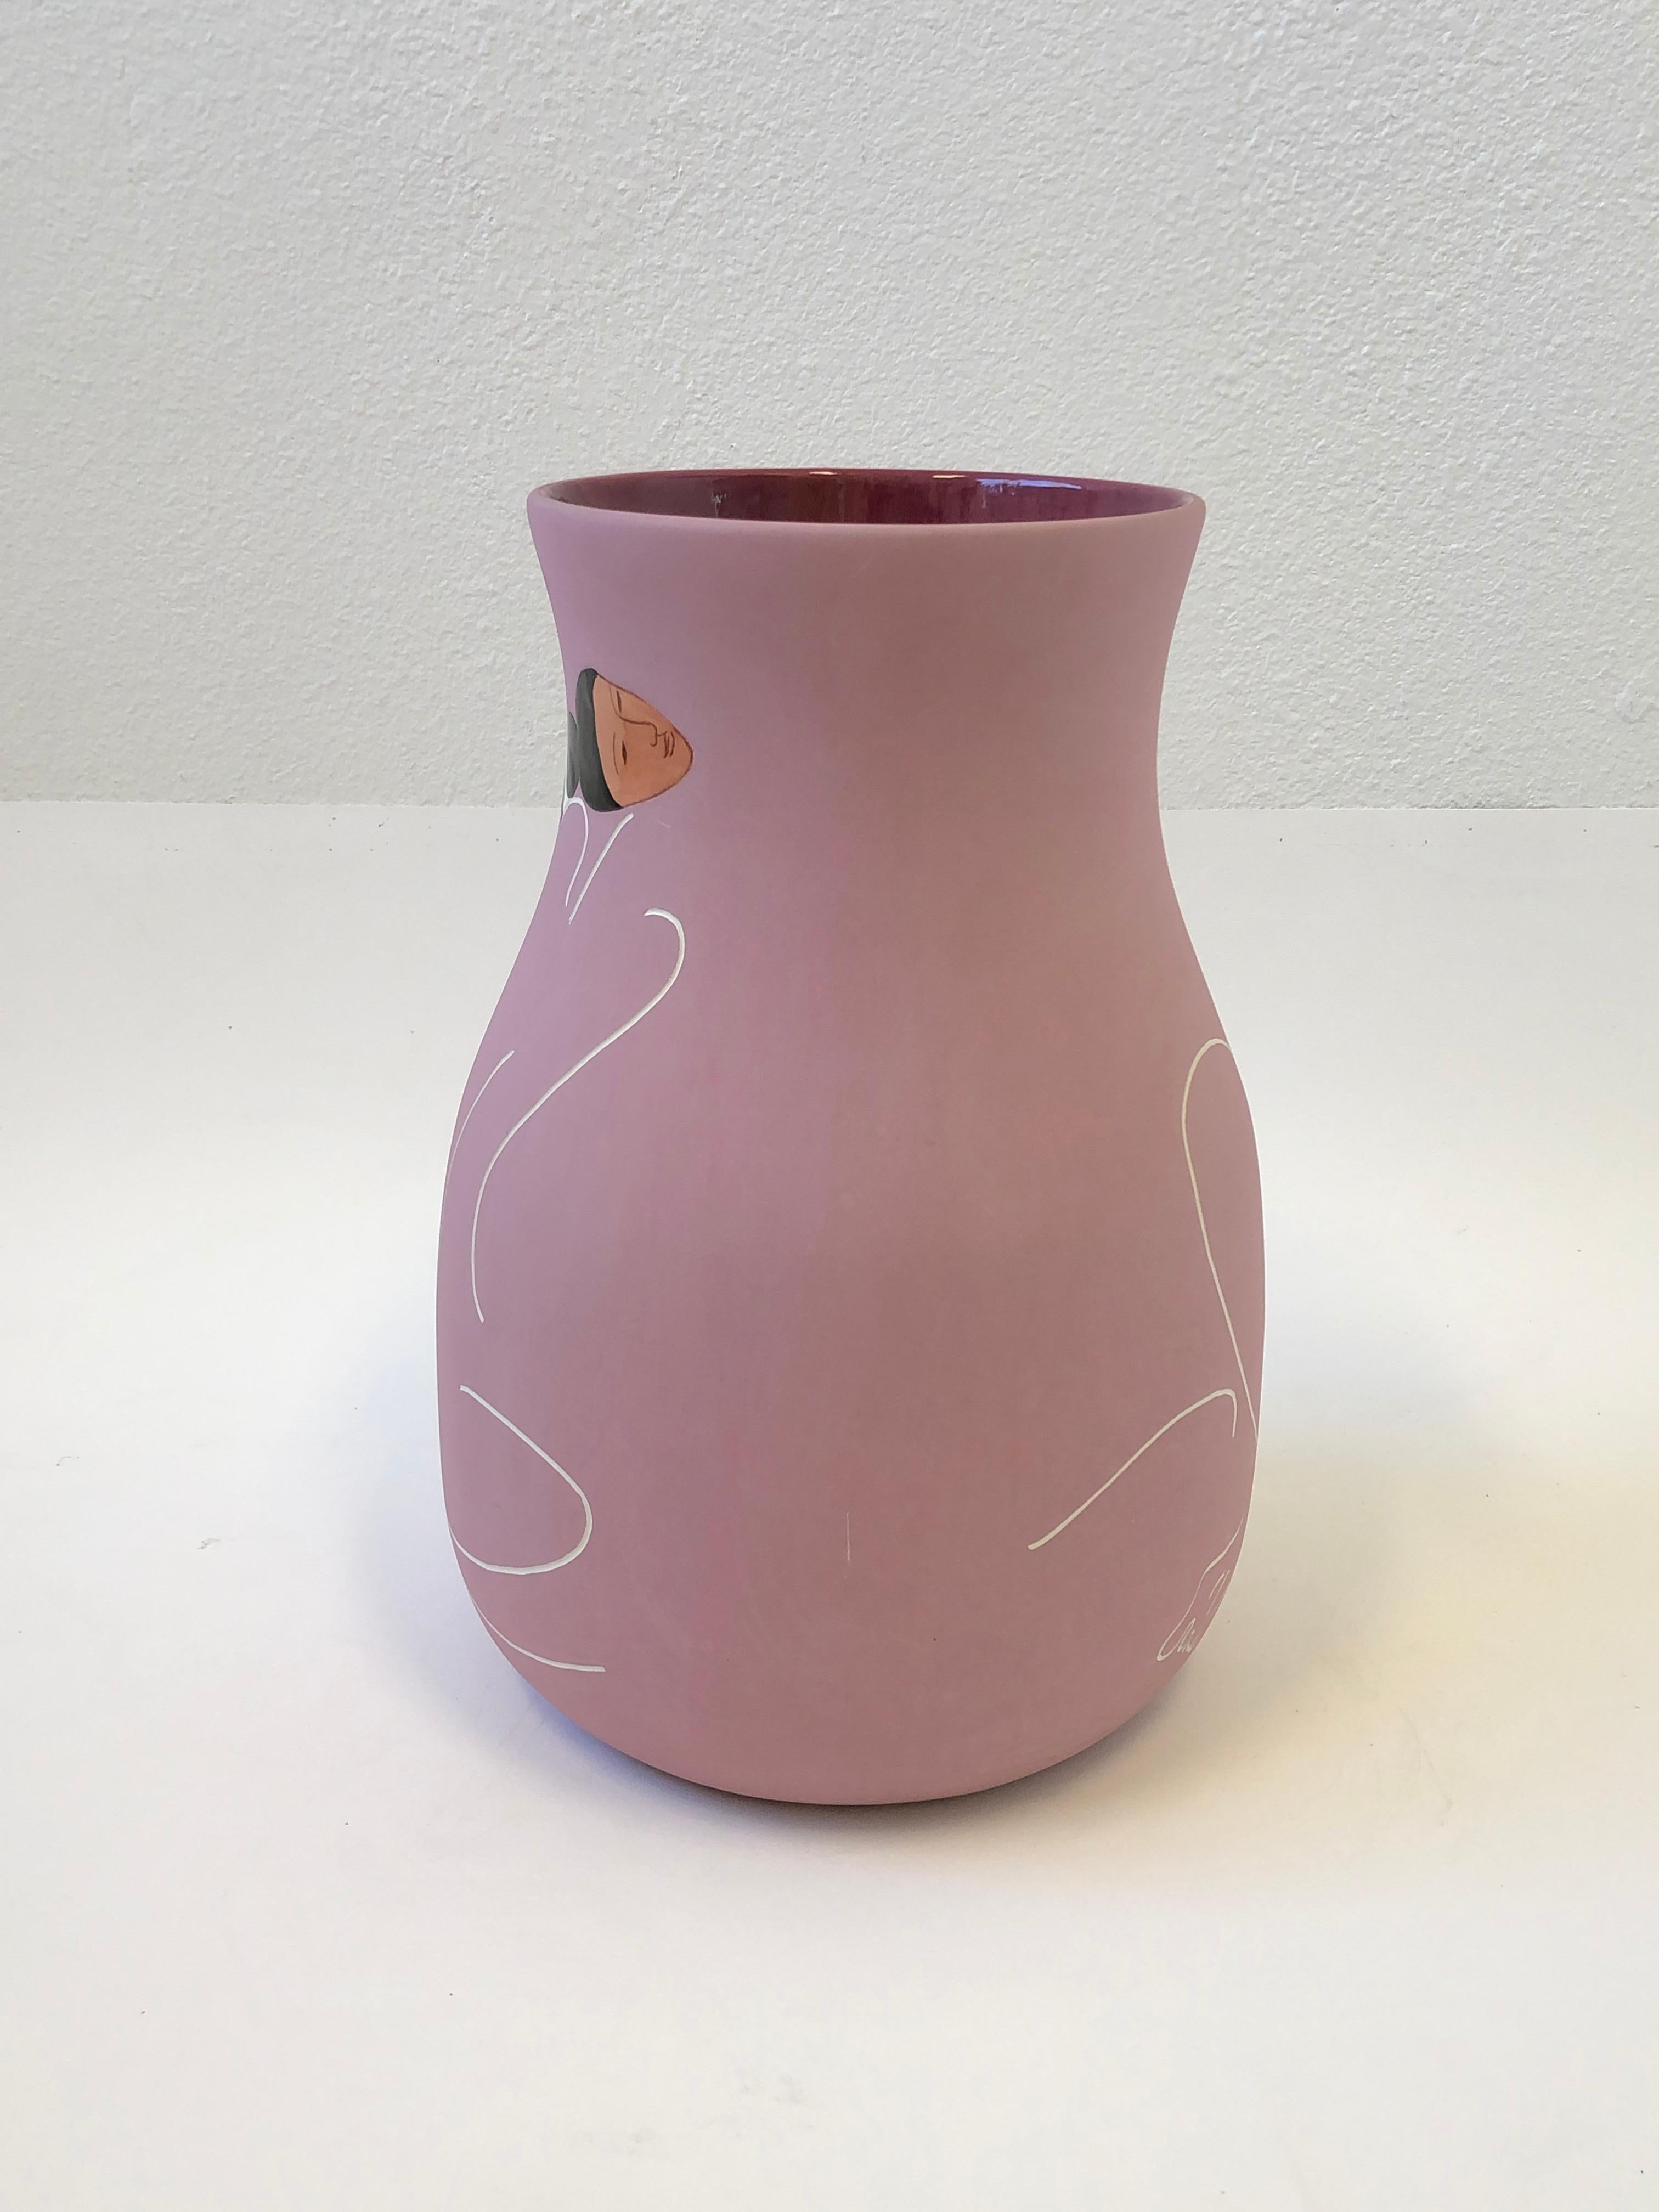 American Studio Ceramic Vase by Rudolph Carl Gorman